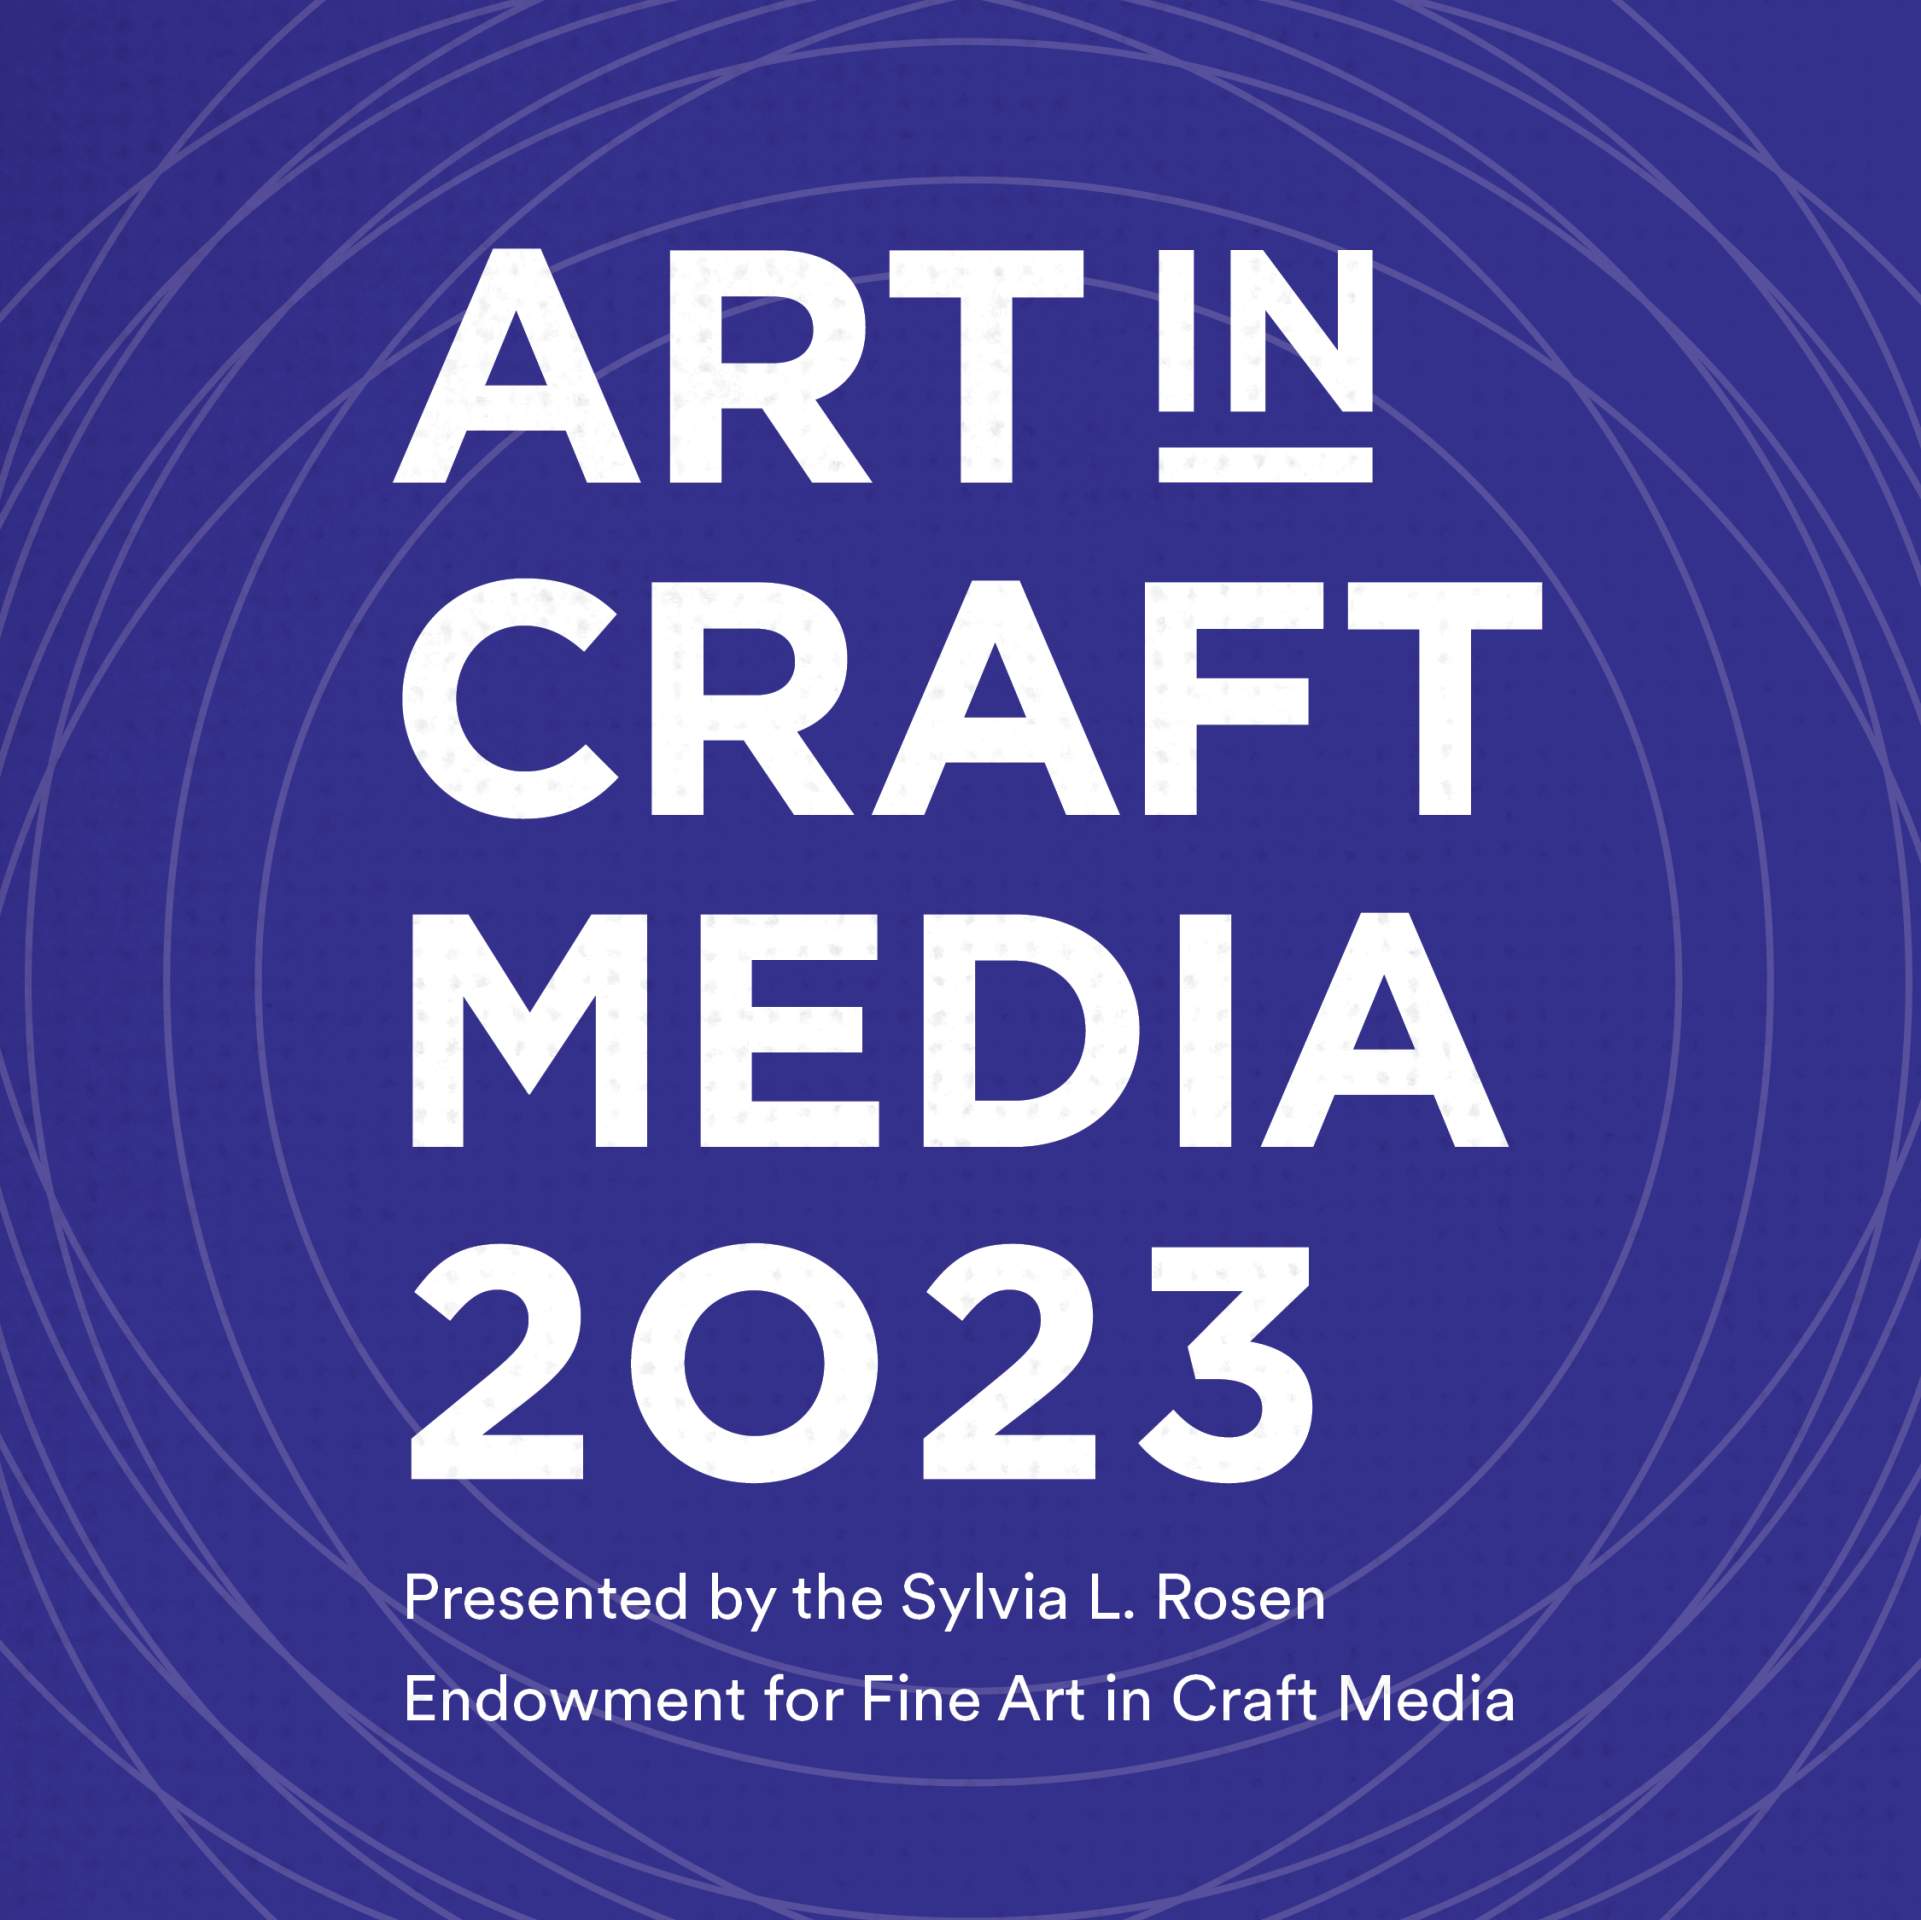 Peter B. Jones Named 2023 Juror for Art in Craft Media Exhibition at the Burchfield Penney Art Center 